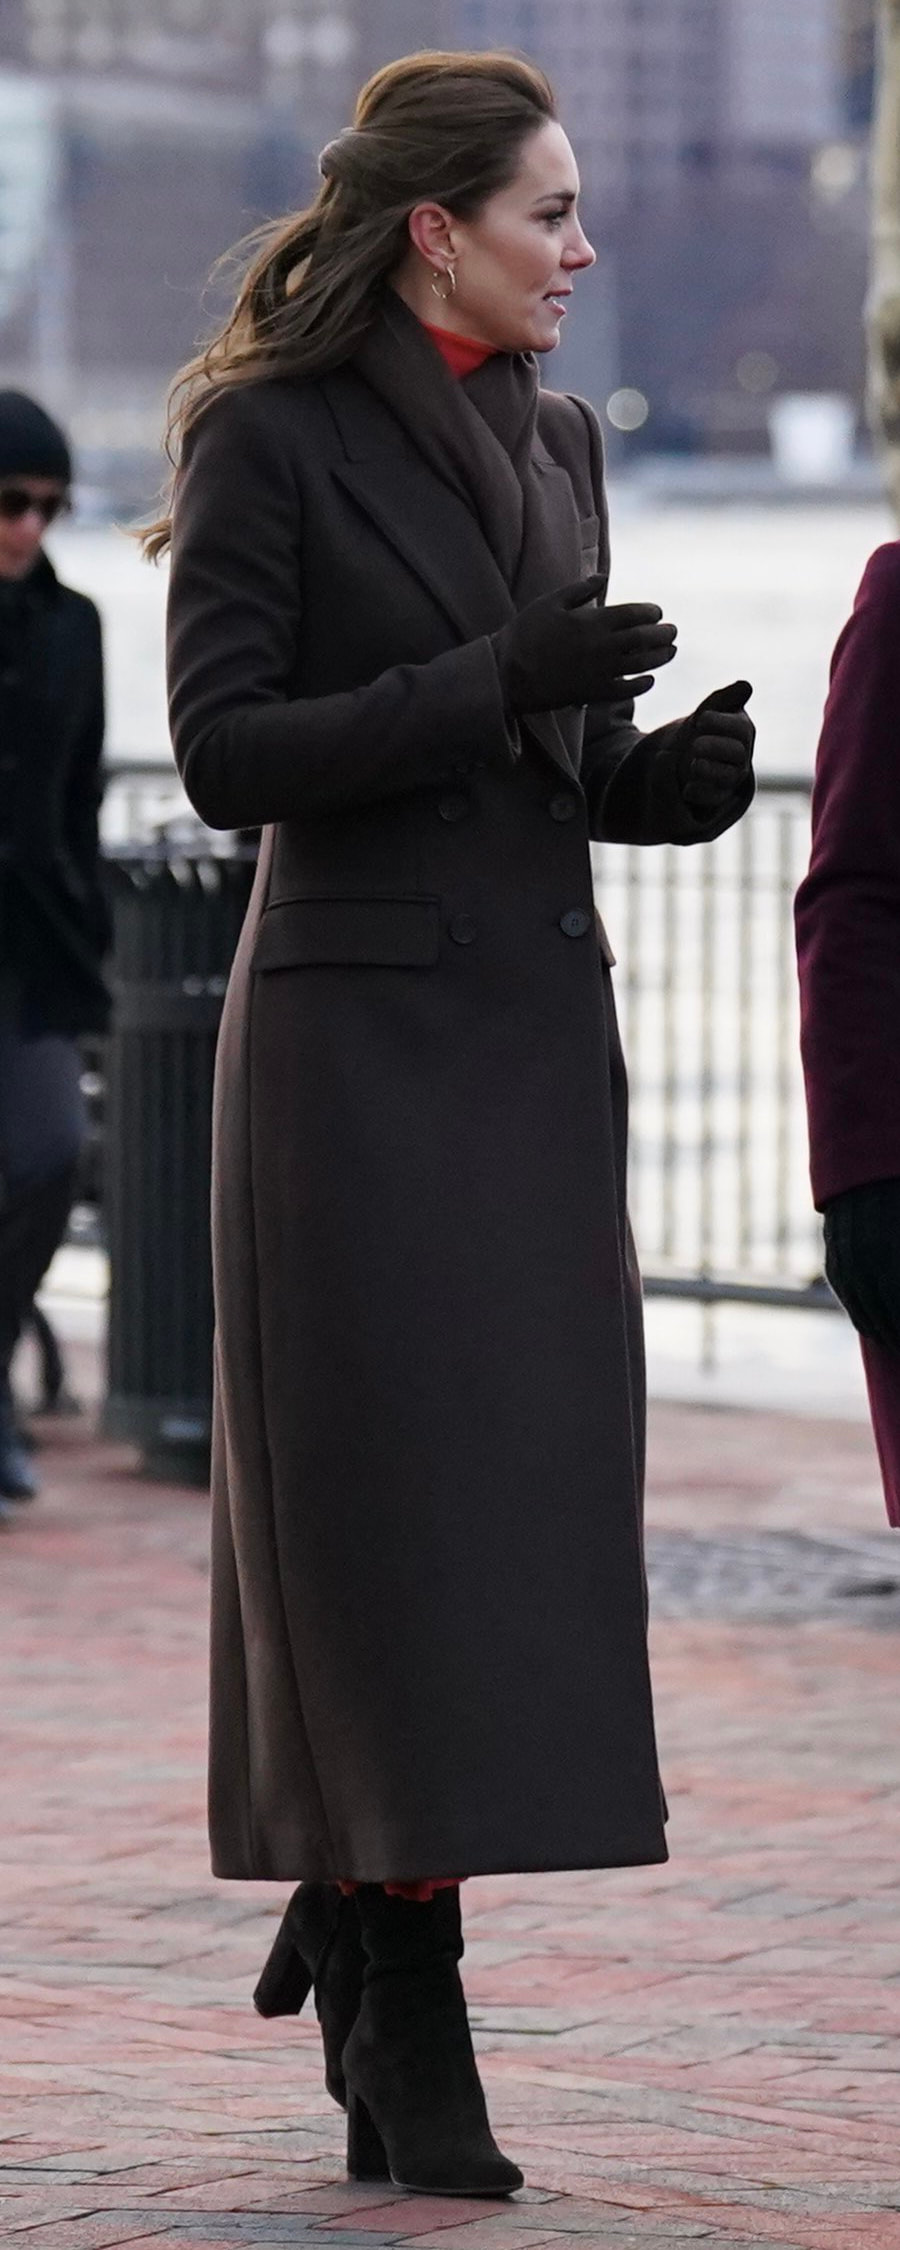 Catherine Walker Evie Coatdress in Black as seen on Kate Middleton, Princess of Wales.